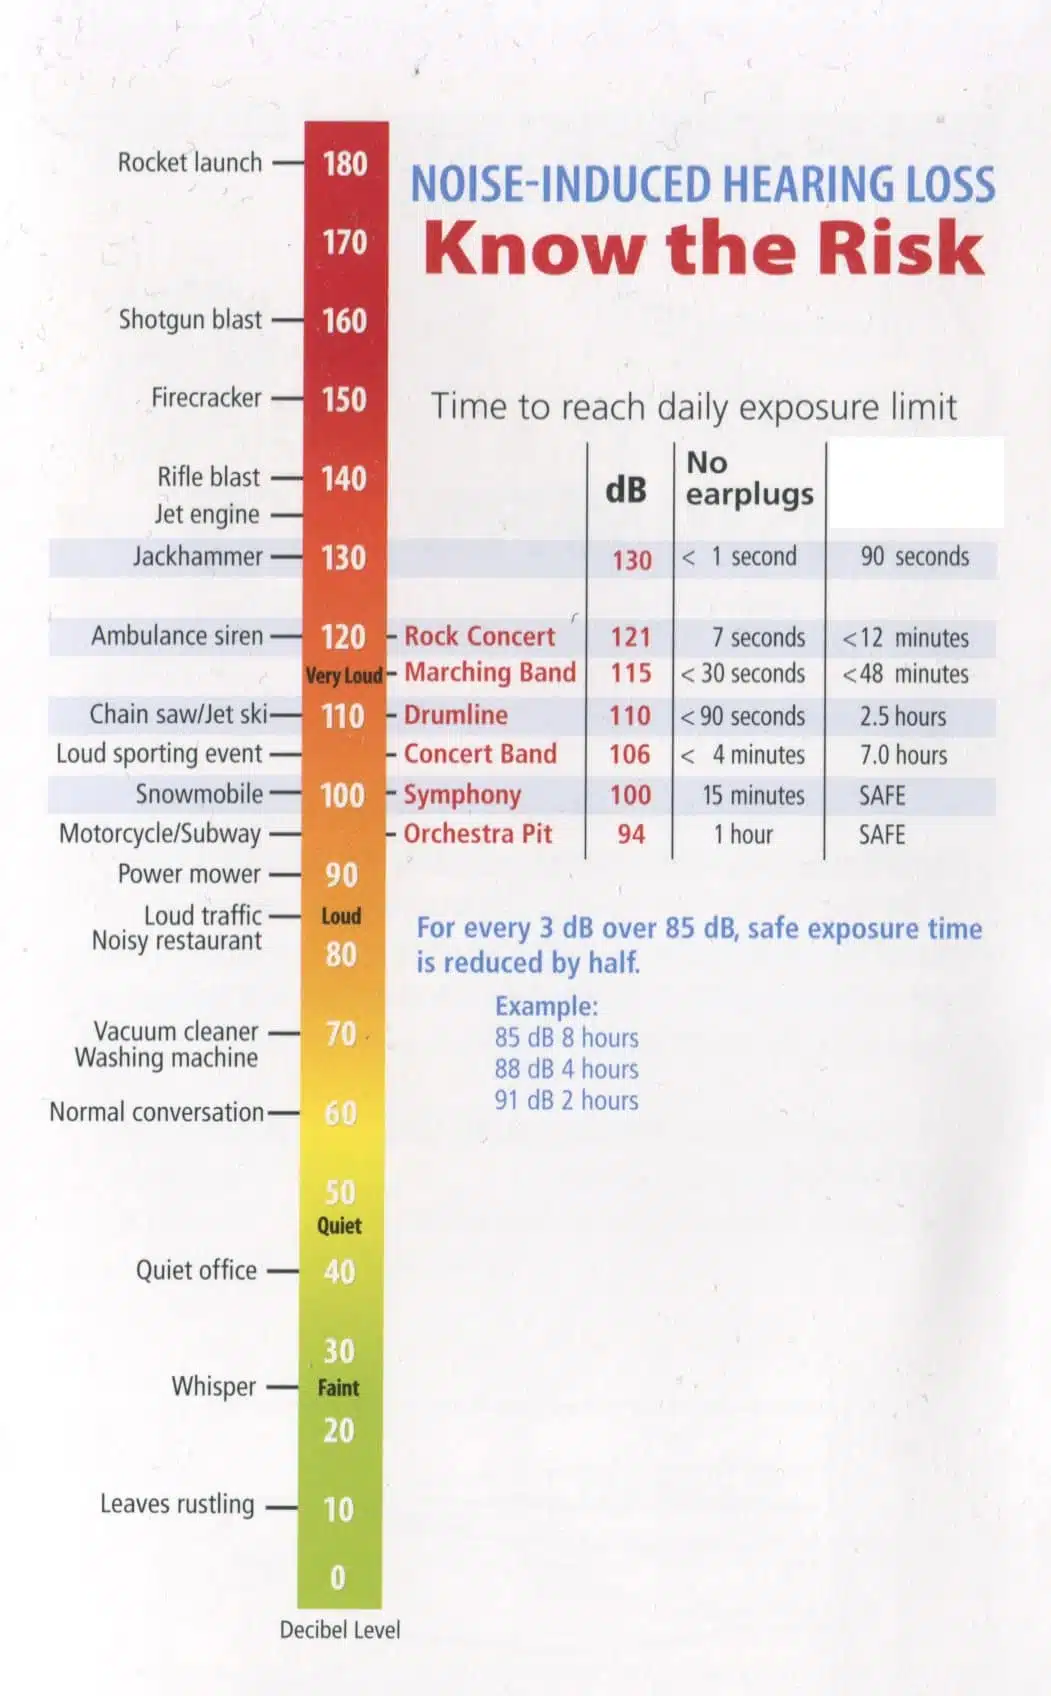 the decibel scale measures